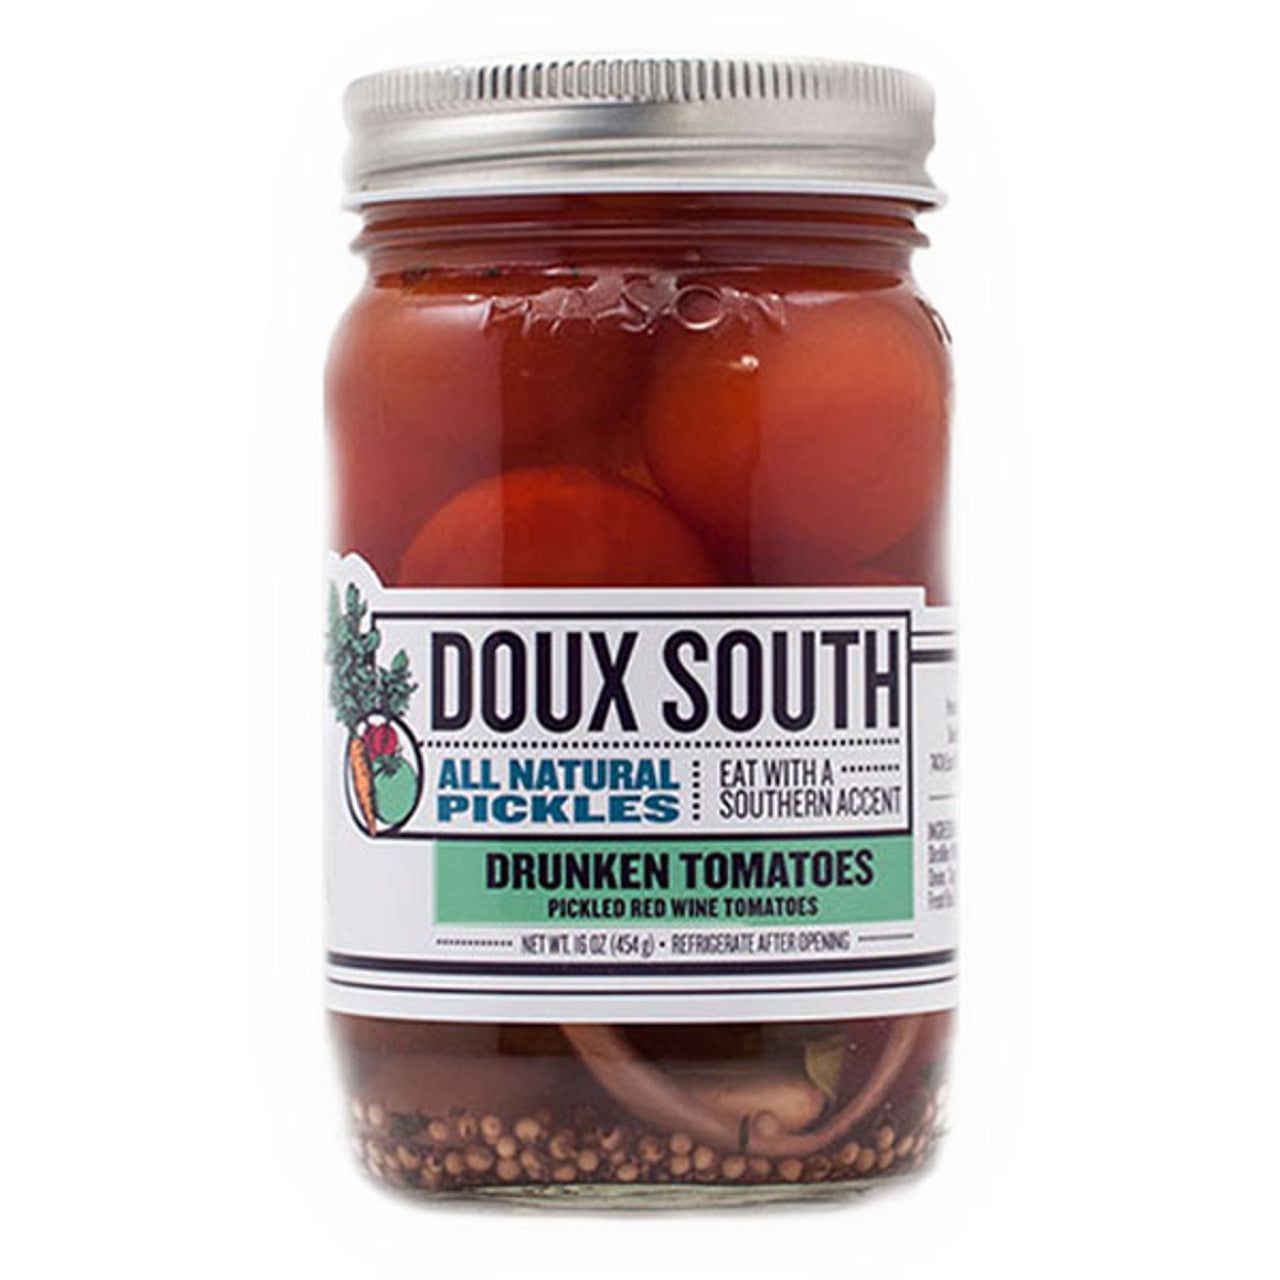 Drunken Tomatoes- Doux South